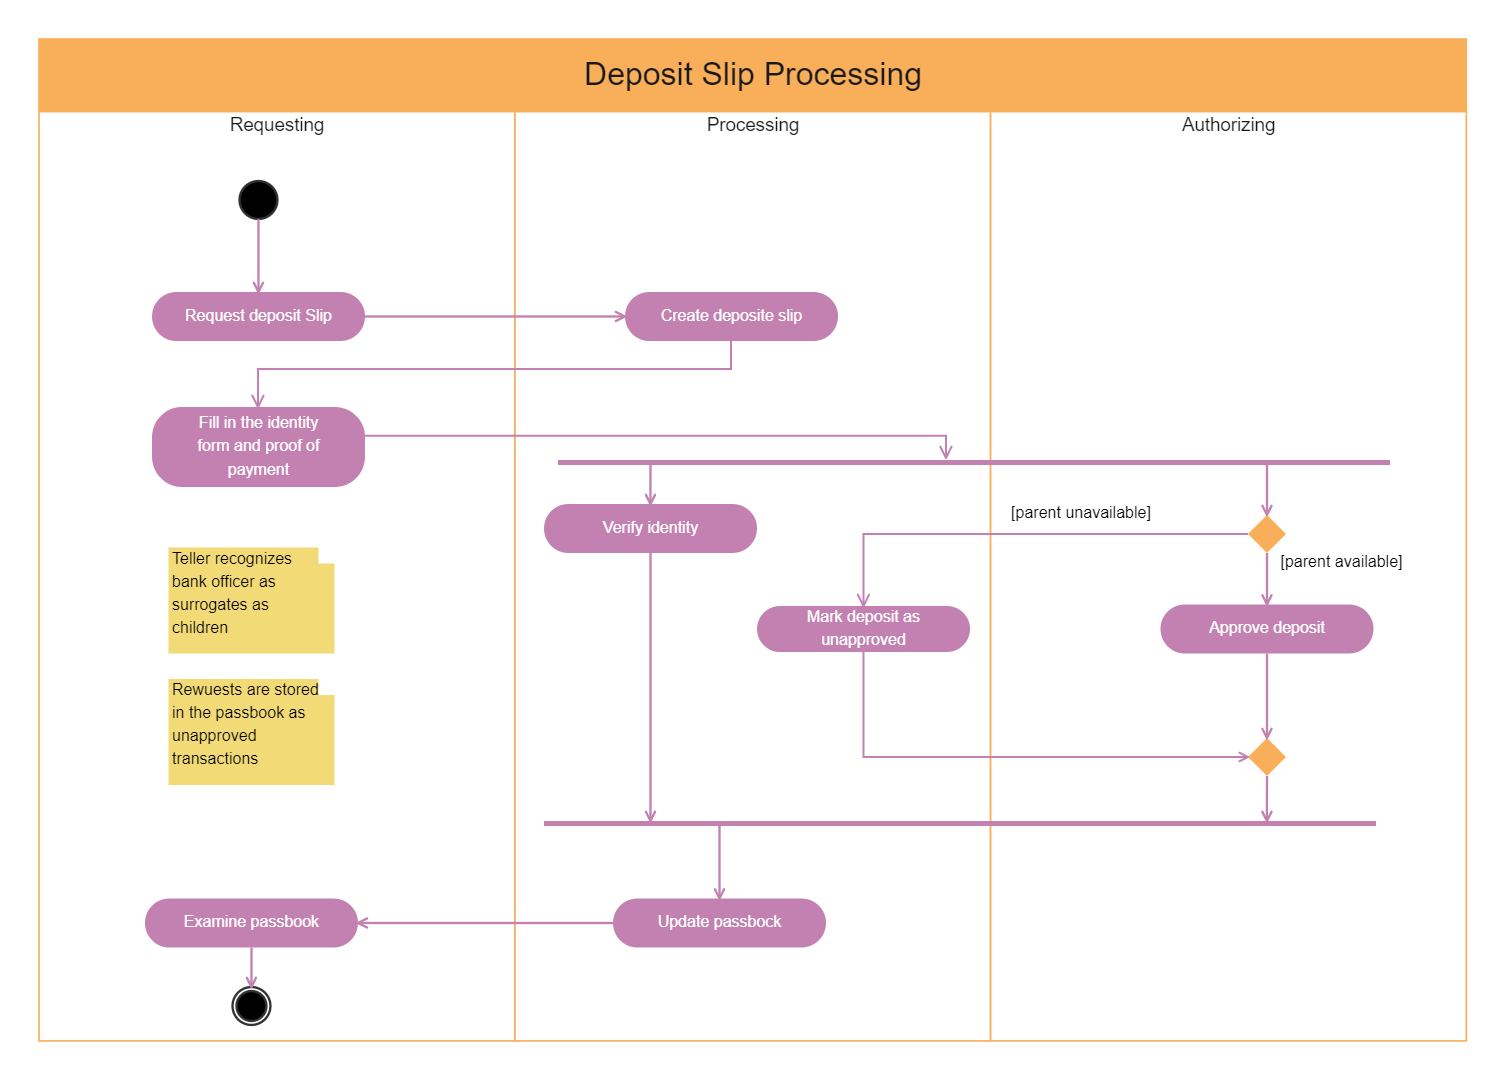 Activity Diagram of Deposit Slip Processing